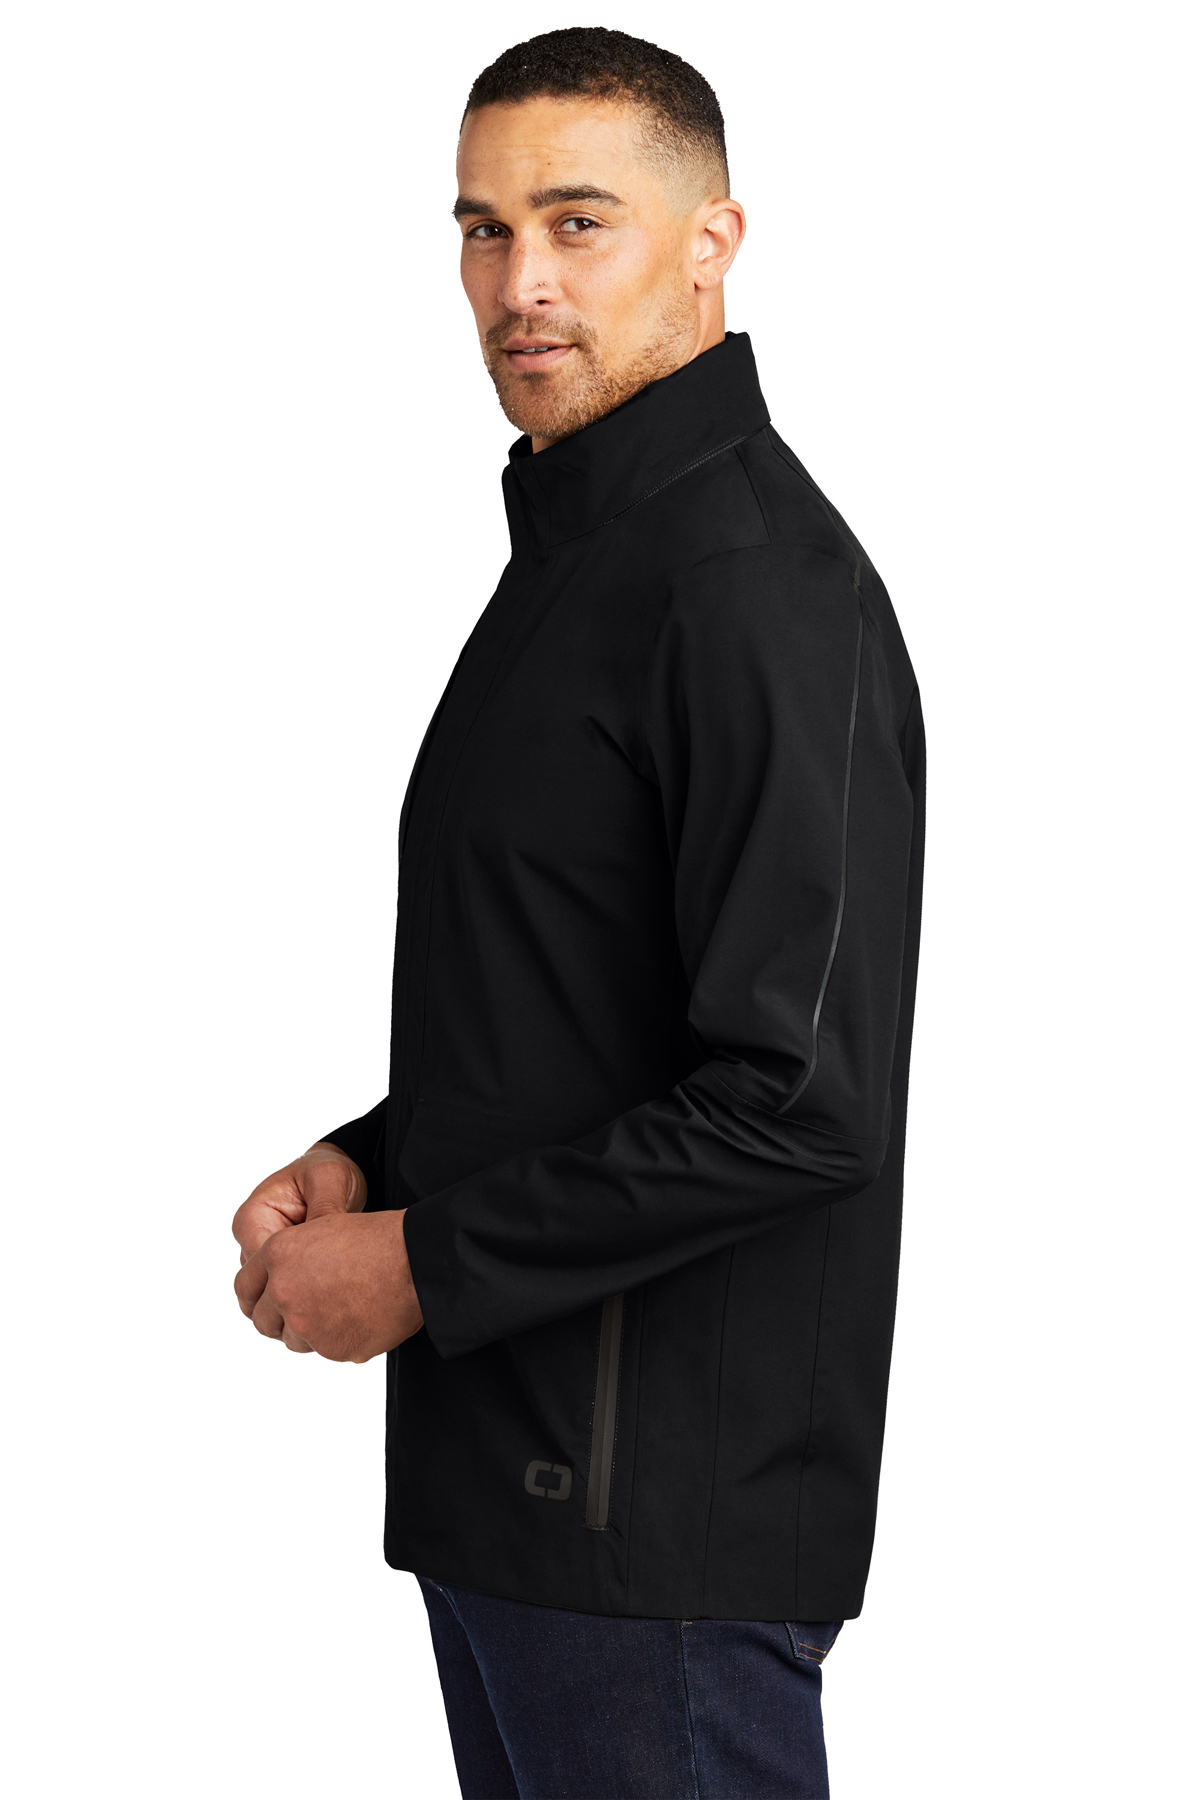 OGIO Utilitarian Jacket | Product | Company Casuals